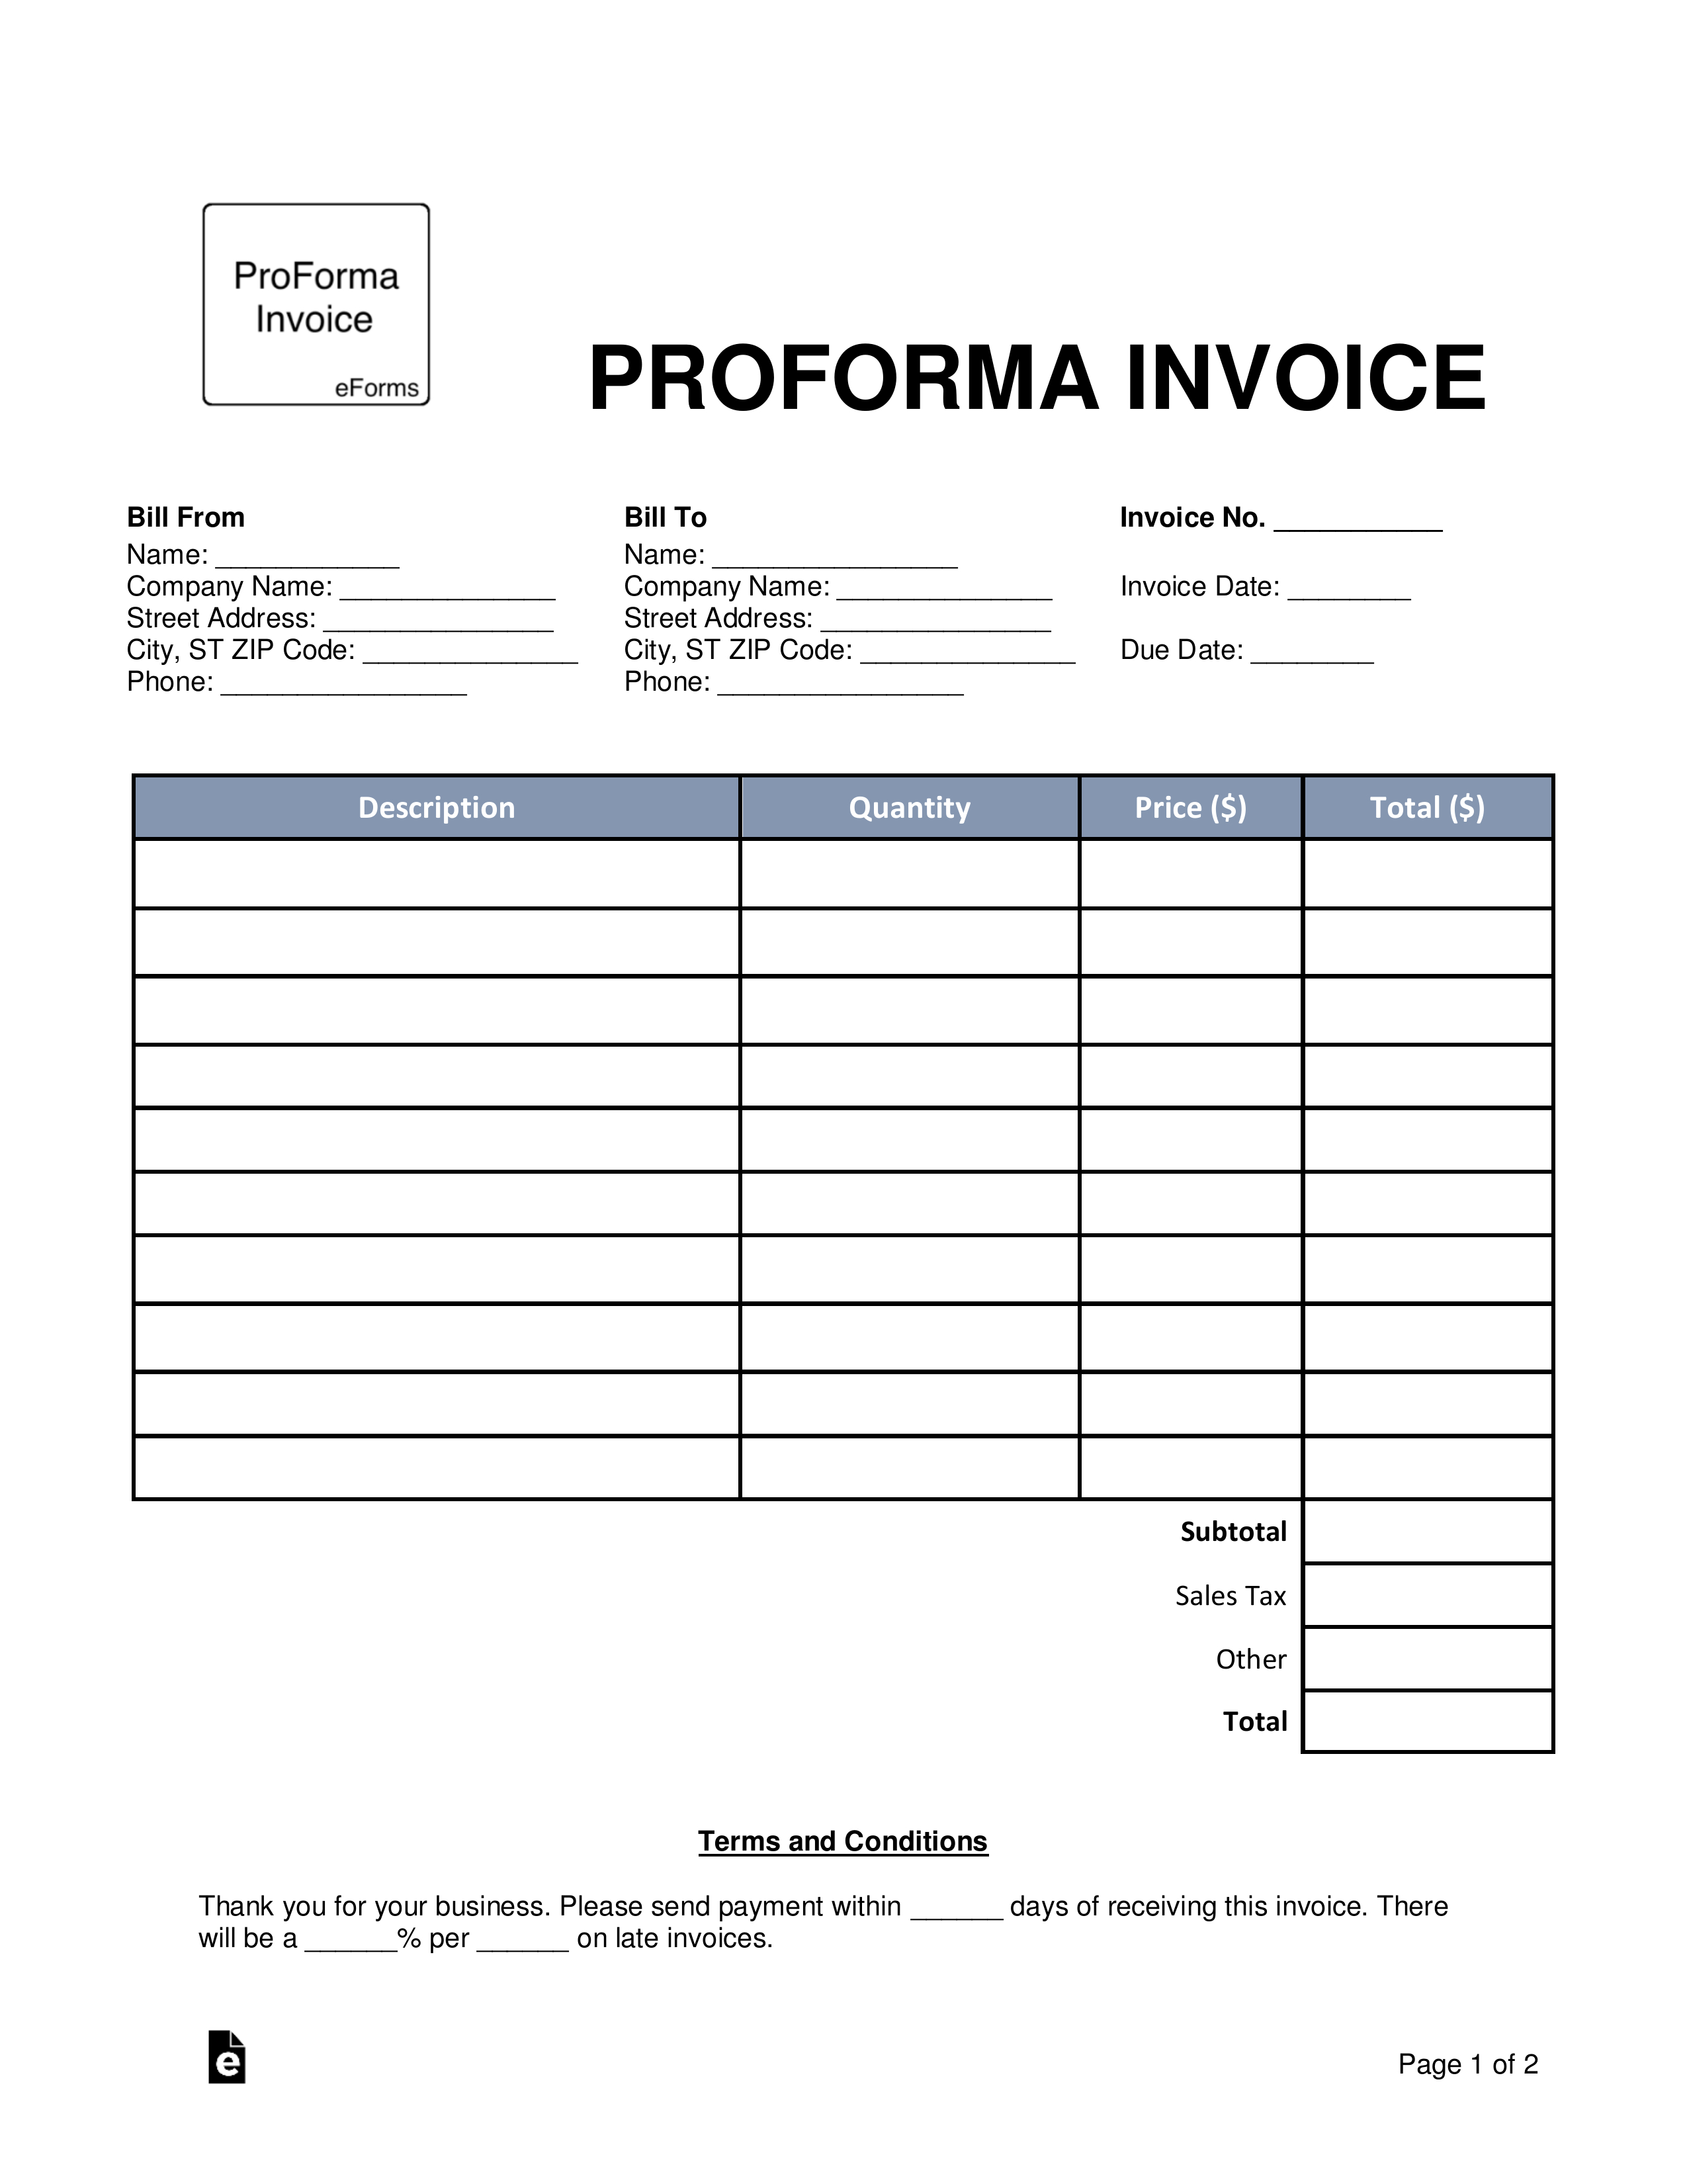 Free Proforma Invoice Template - Word | Pdf | Eforms – Free Inside Free Proforma Invoice Template Word